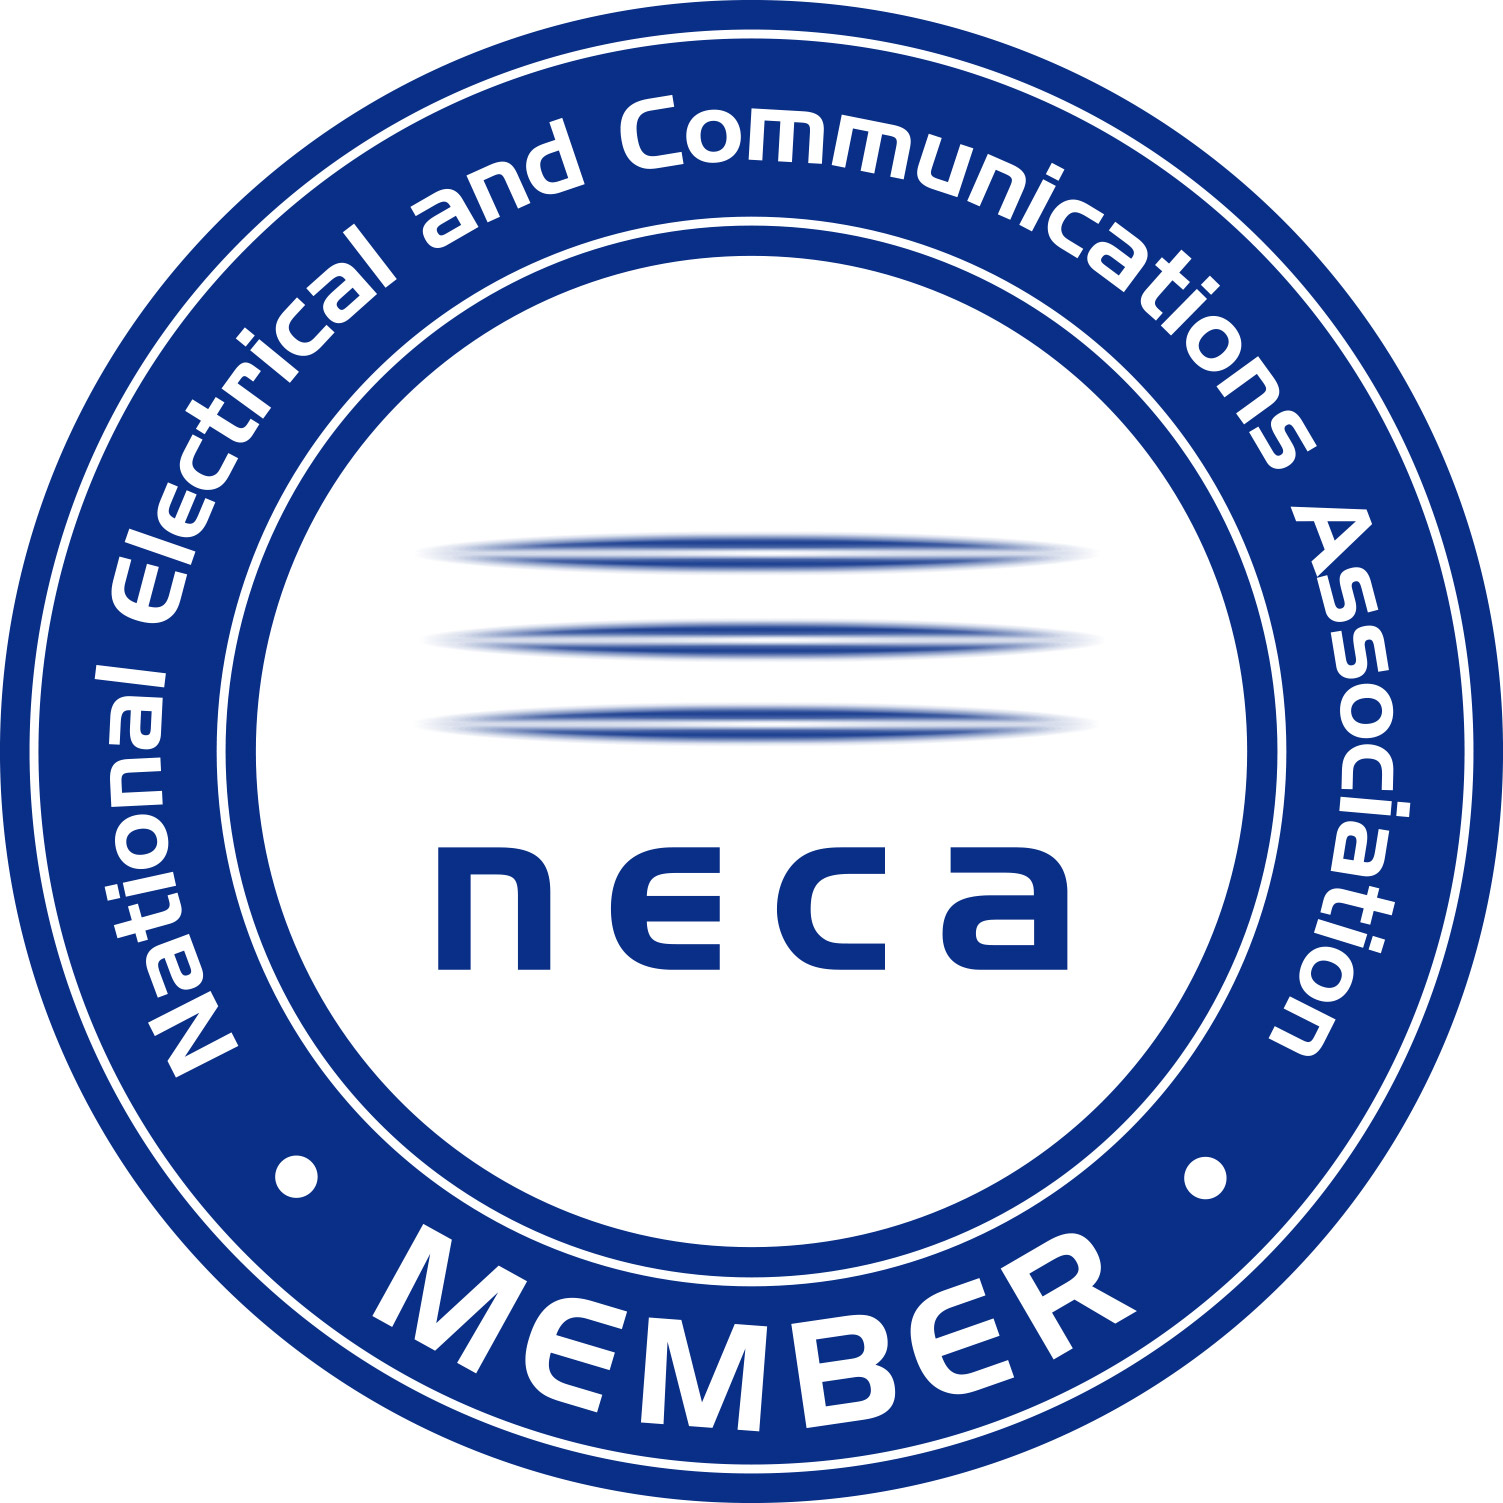 NECA-Member-logo-circle-Pantone-287-v1.jpg